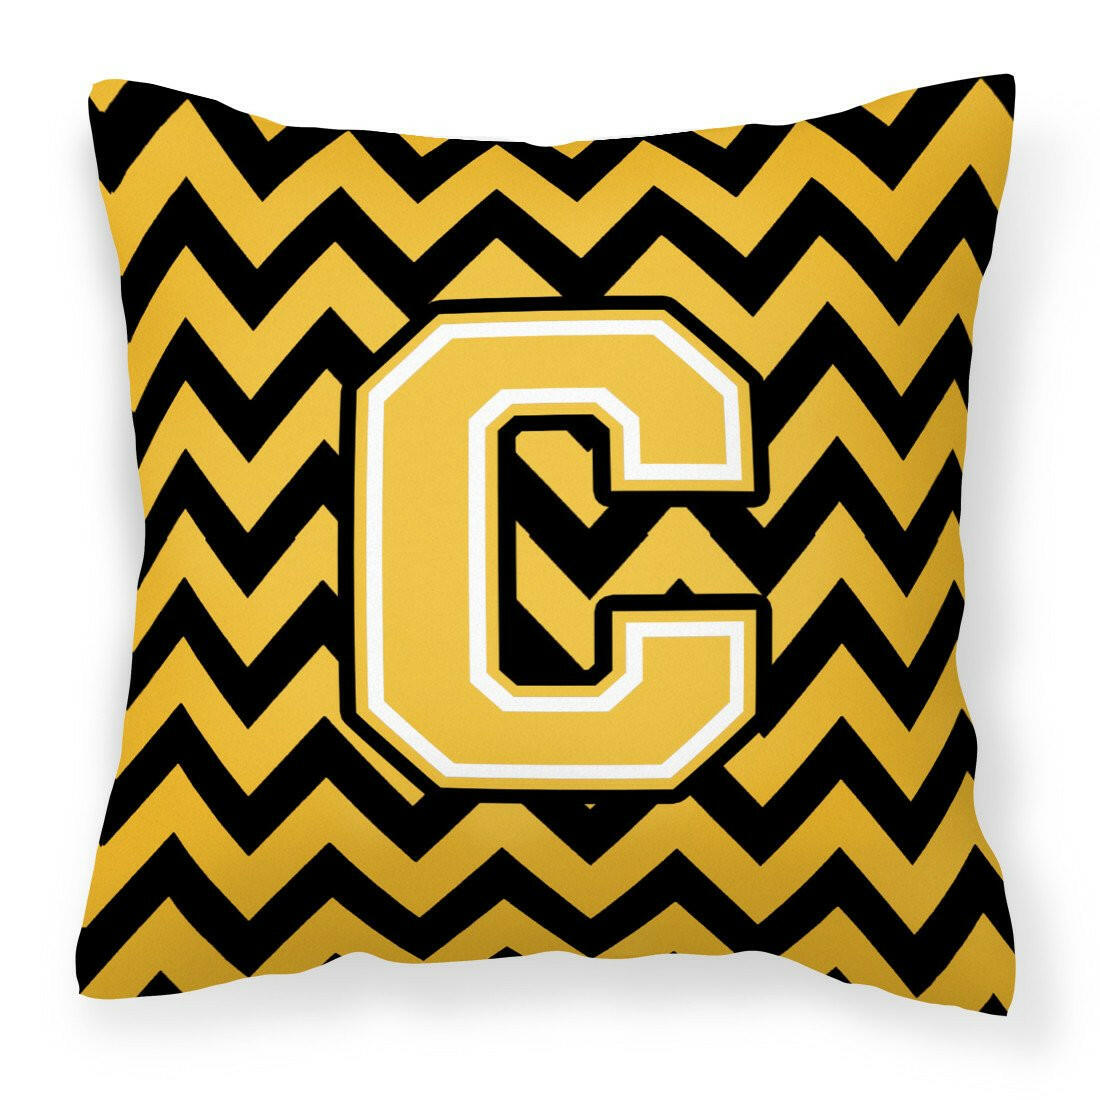 Letter C Chevron Black and Gold Fabric Decorative Pillow CJ1053-CPW1414 by Caroline's Treasures